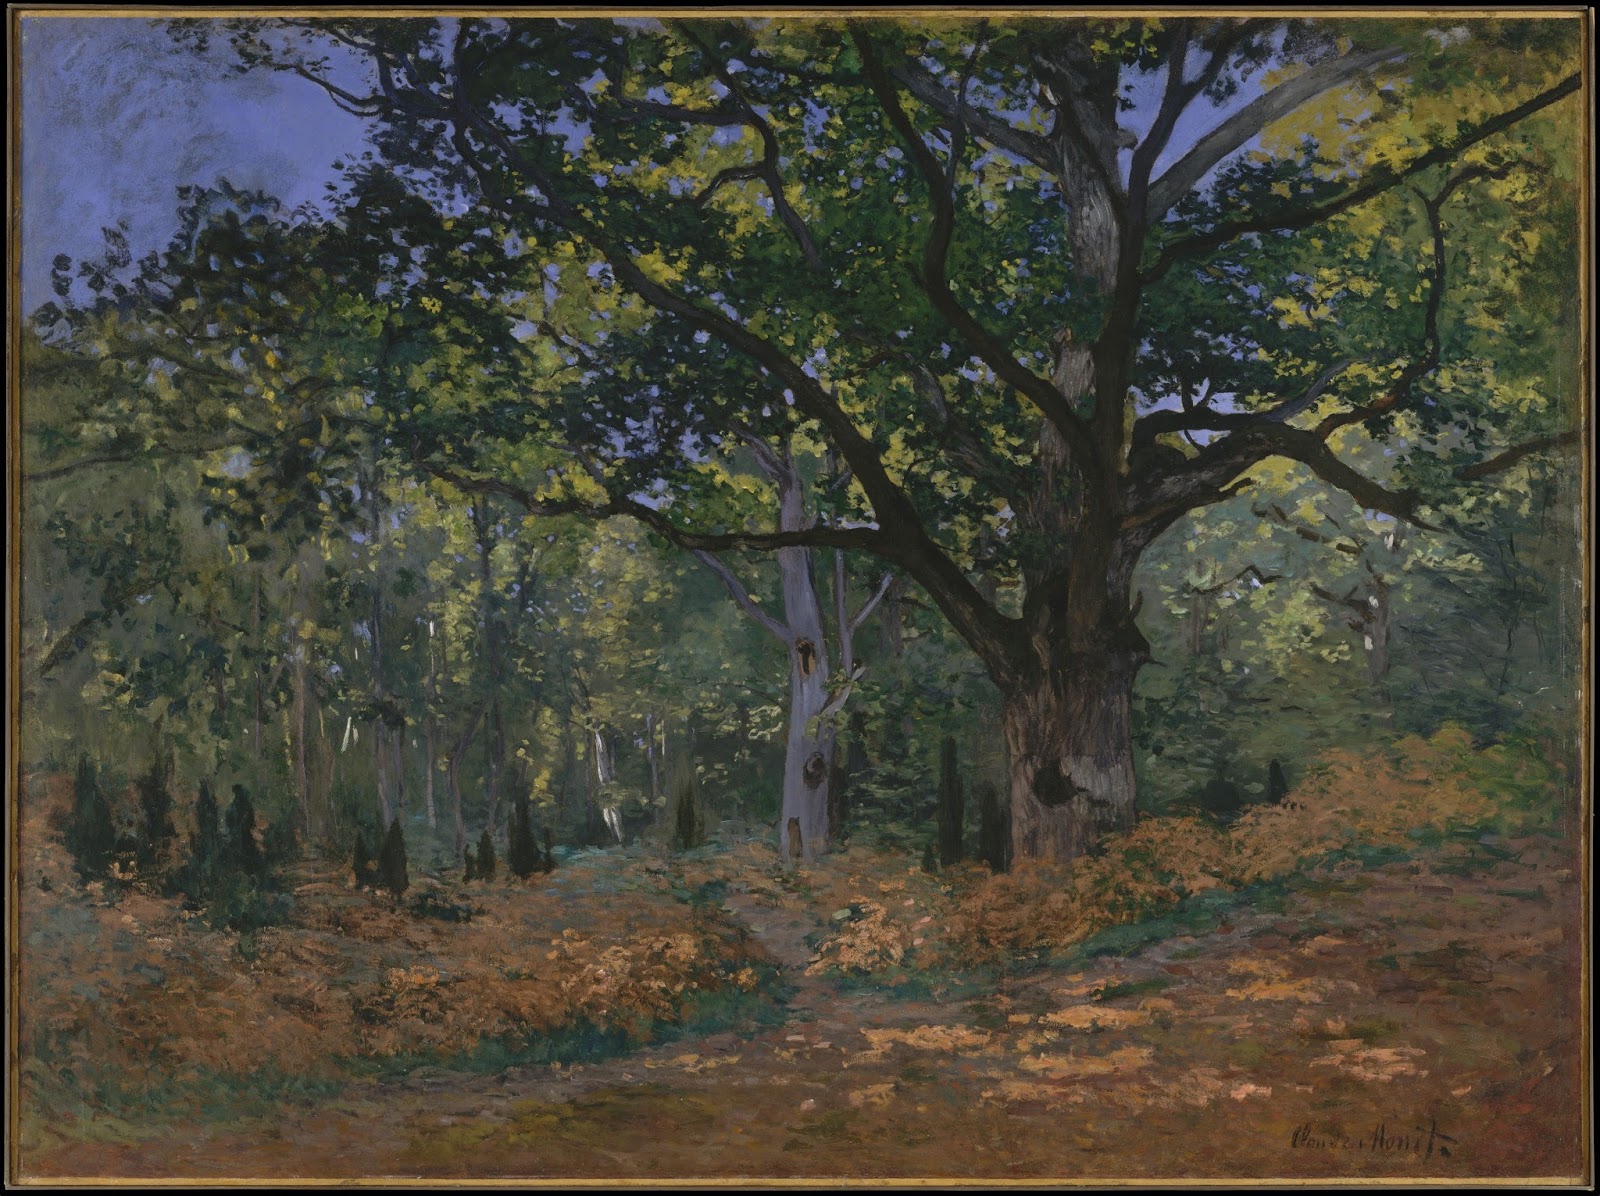 Claude+Monet-1840-1926 (737).jpg